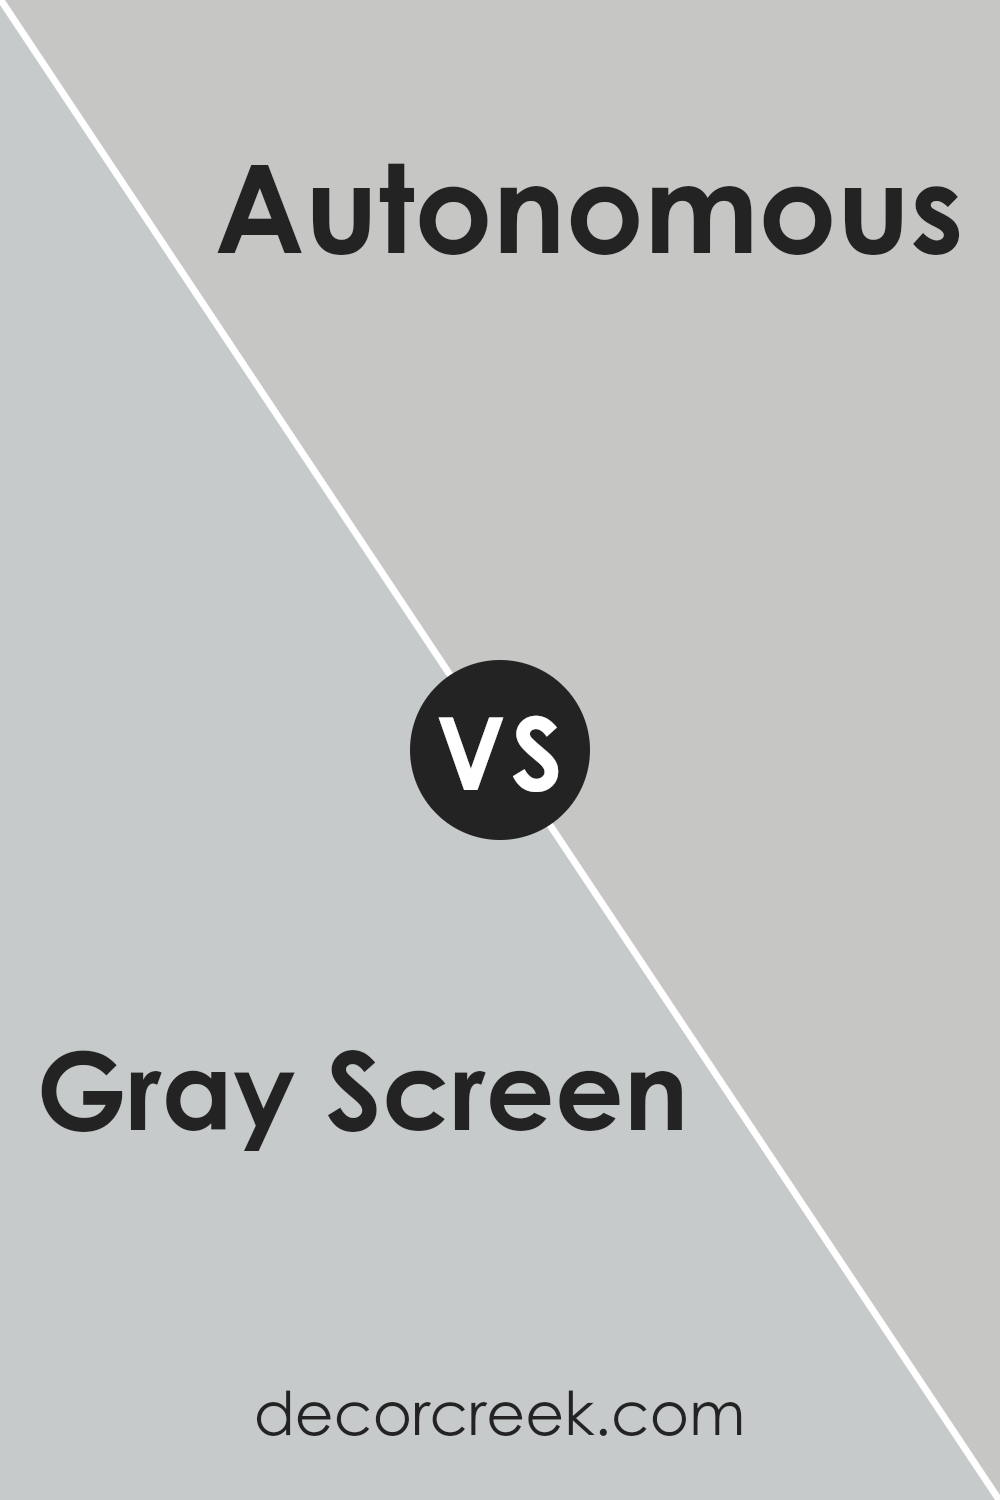 gray_screen_sw_7071_vs_autonomous_sw_9557